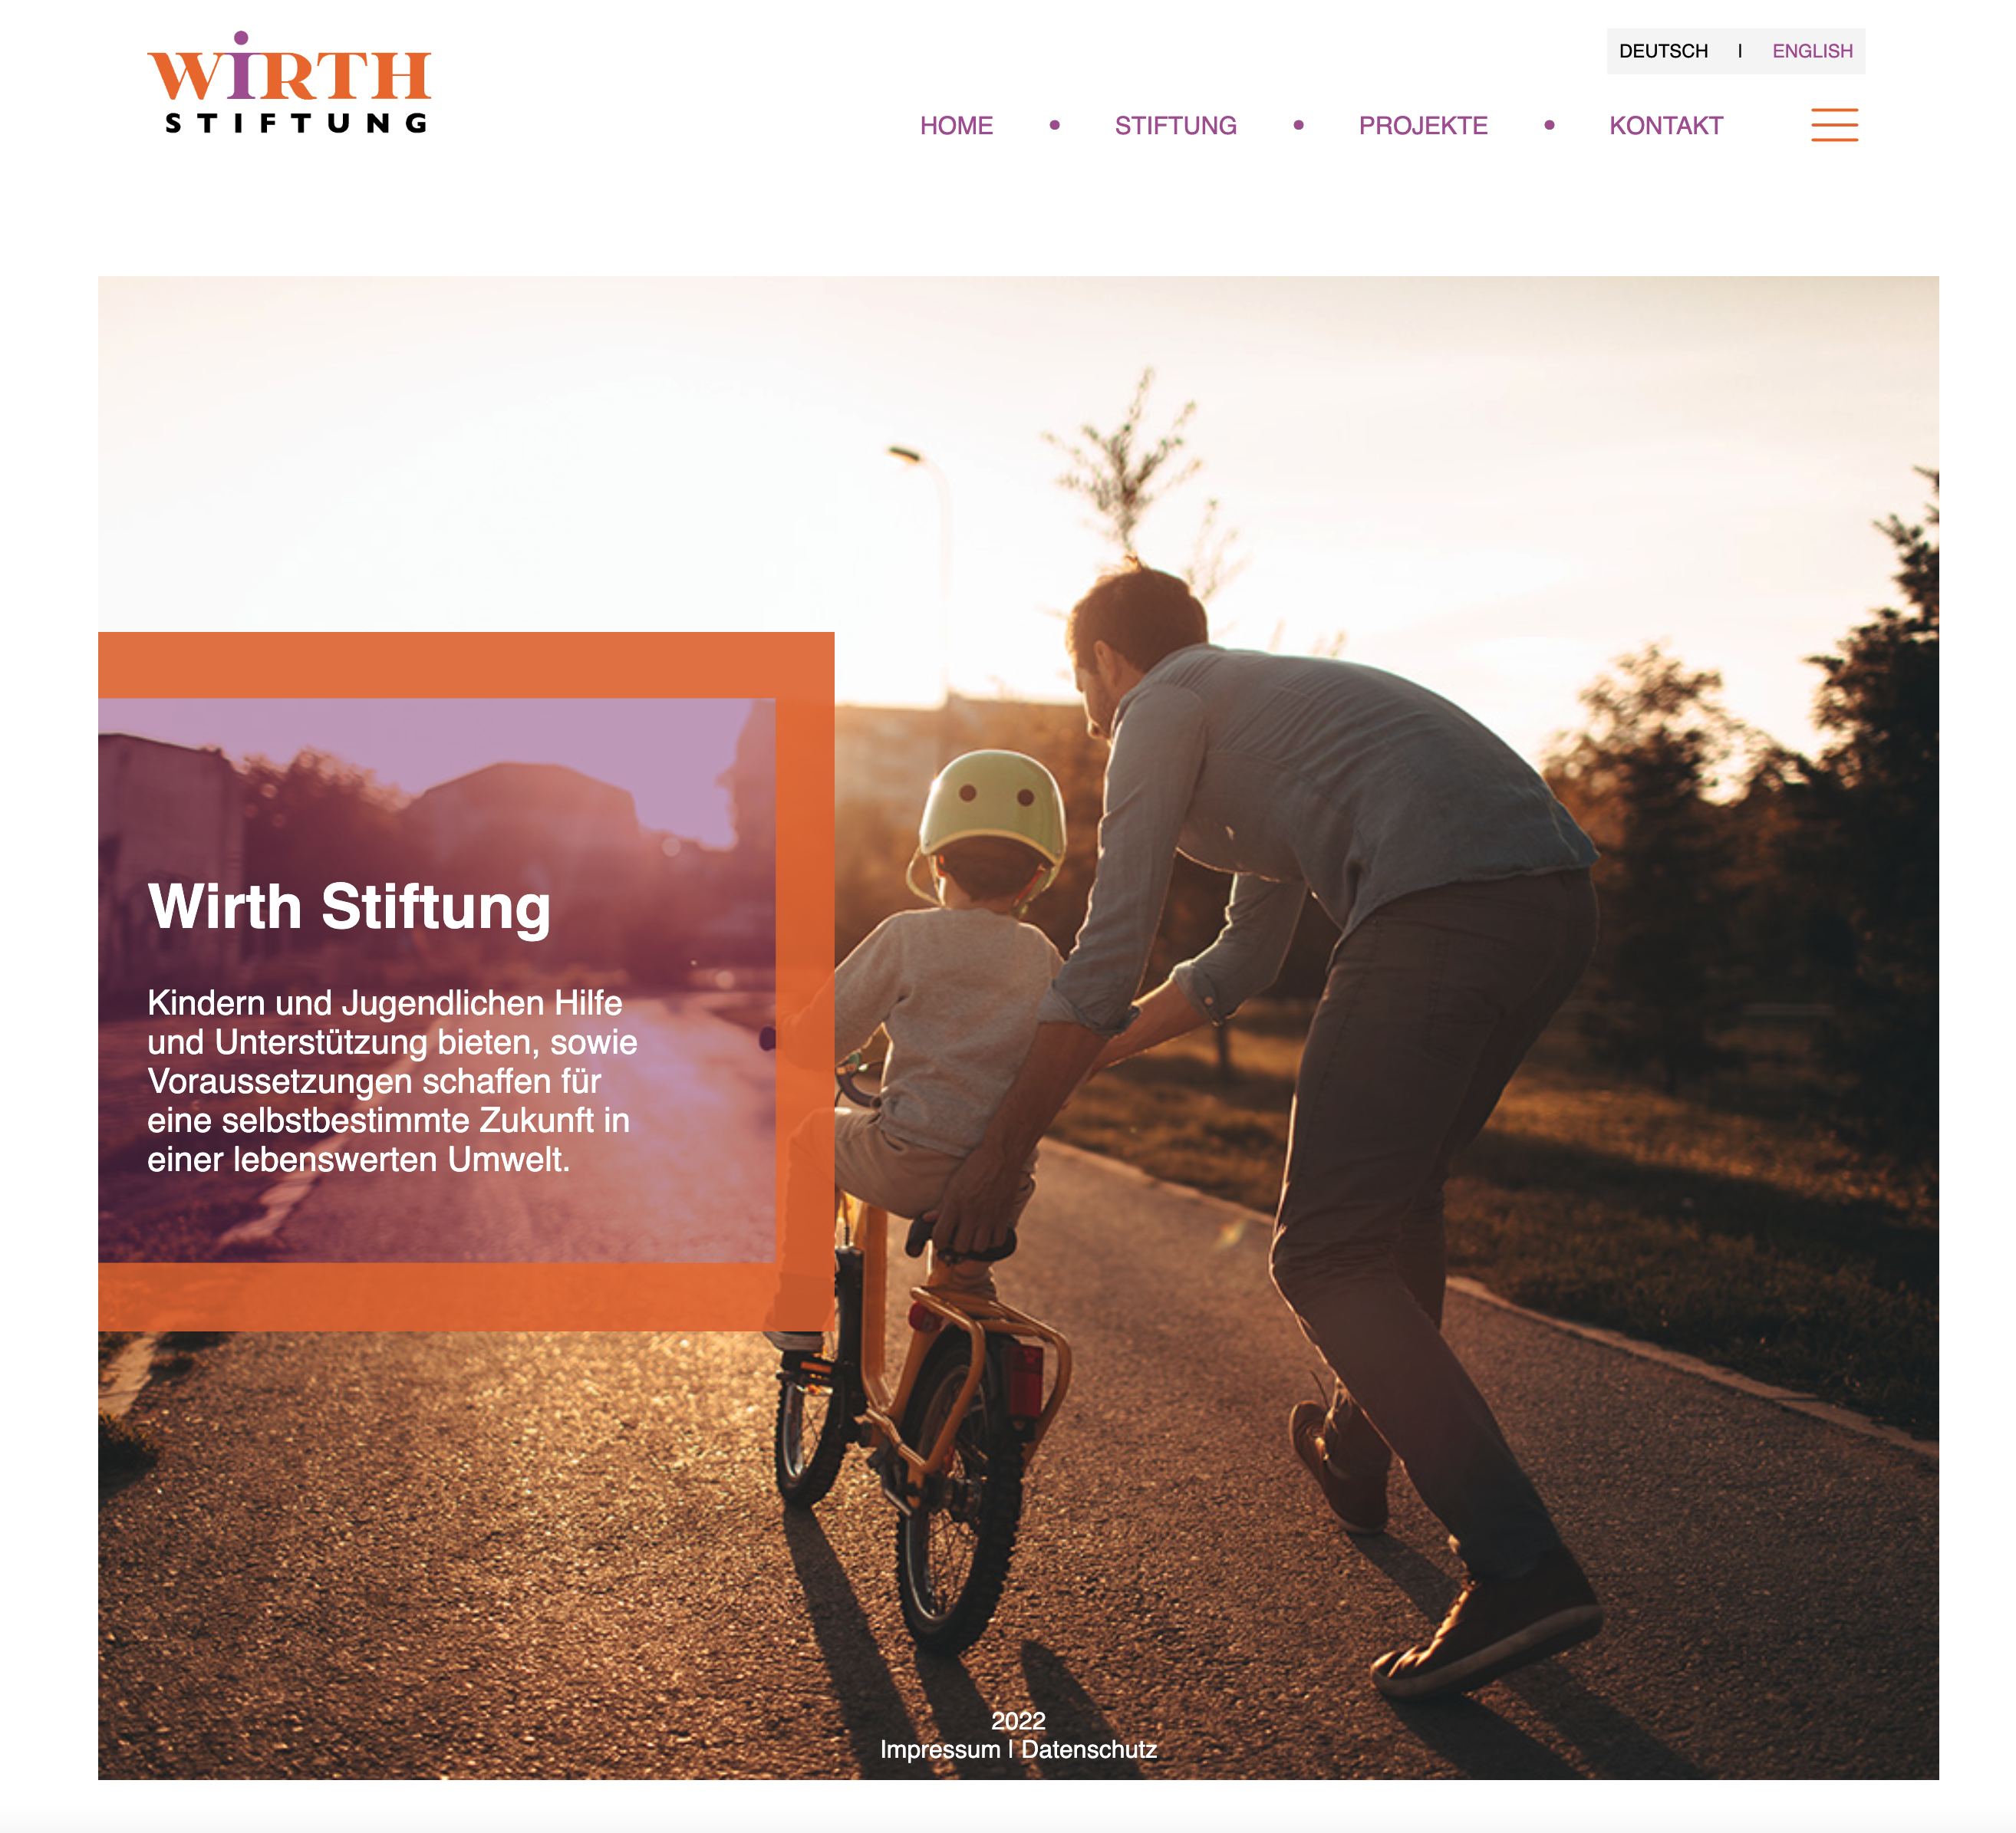 Wirth Stiftung